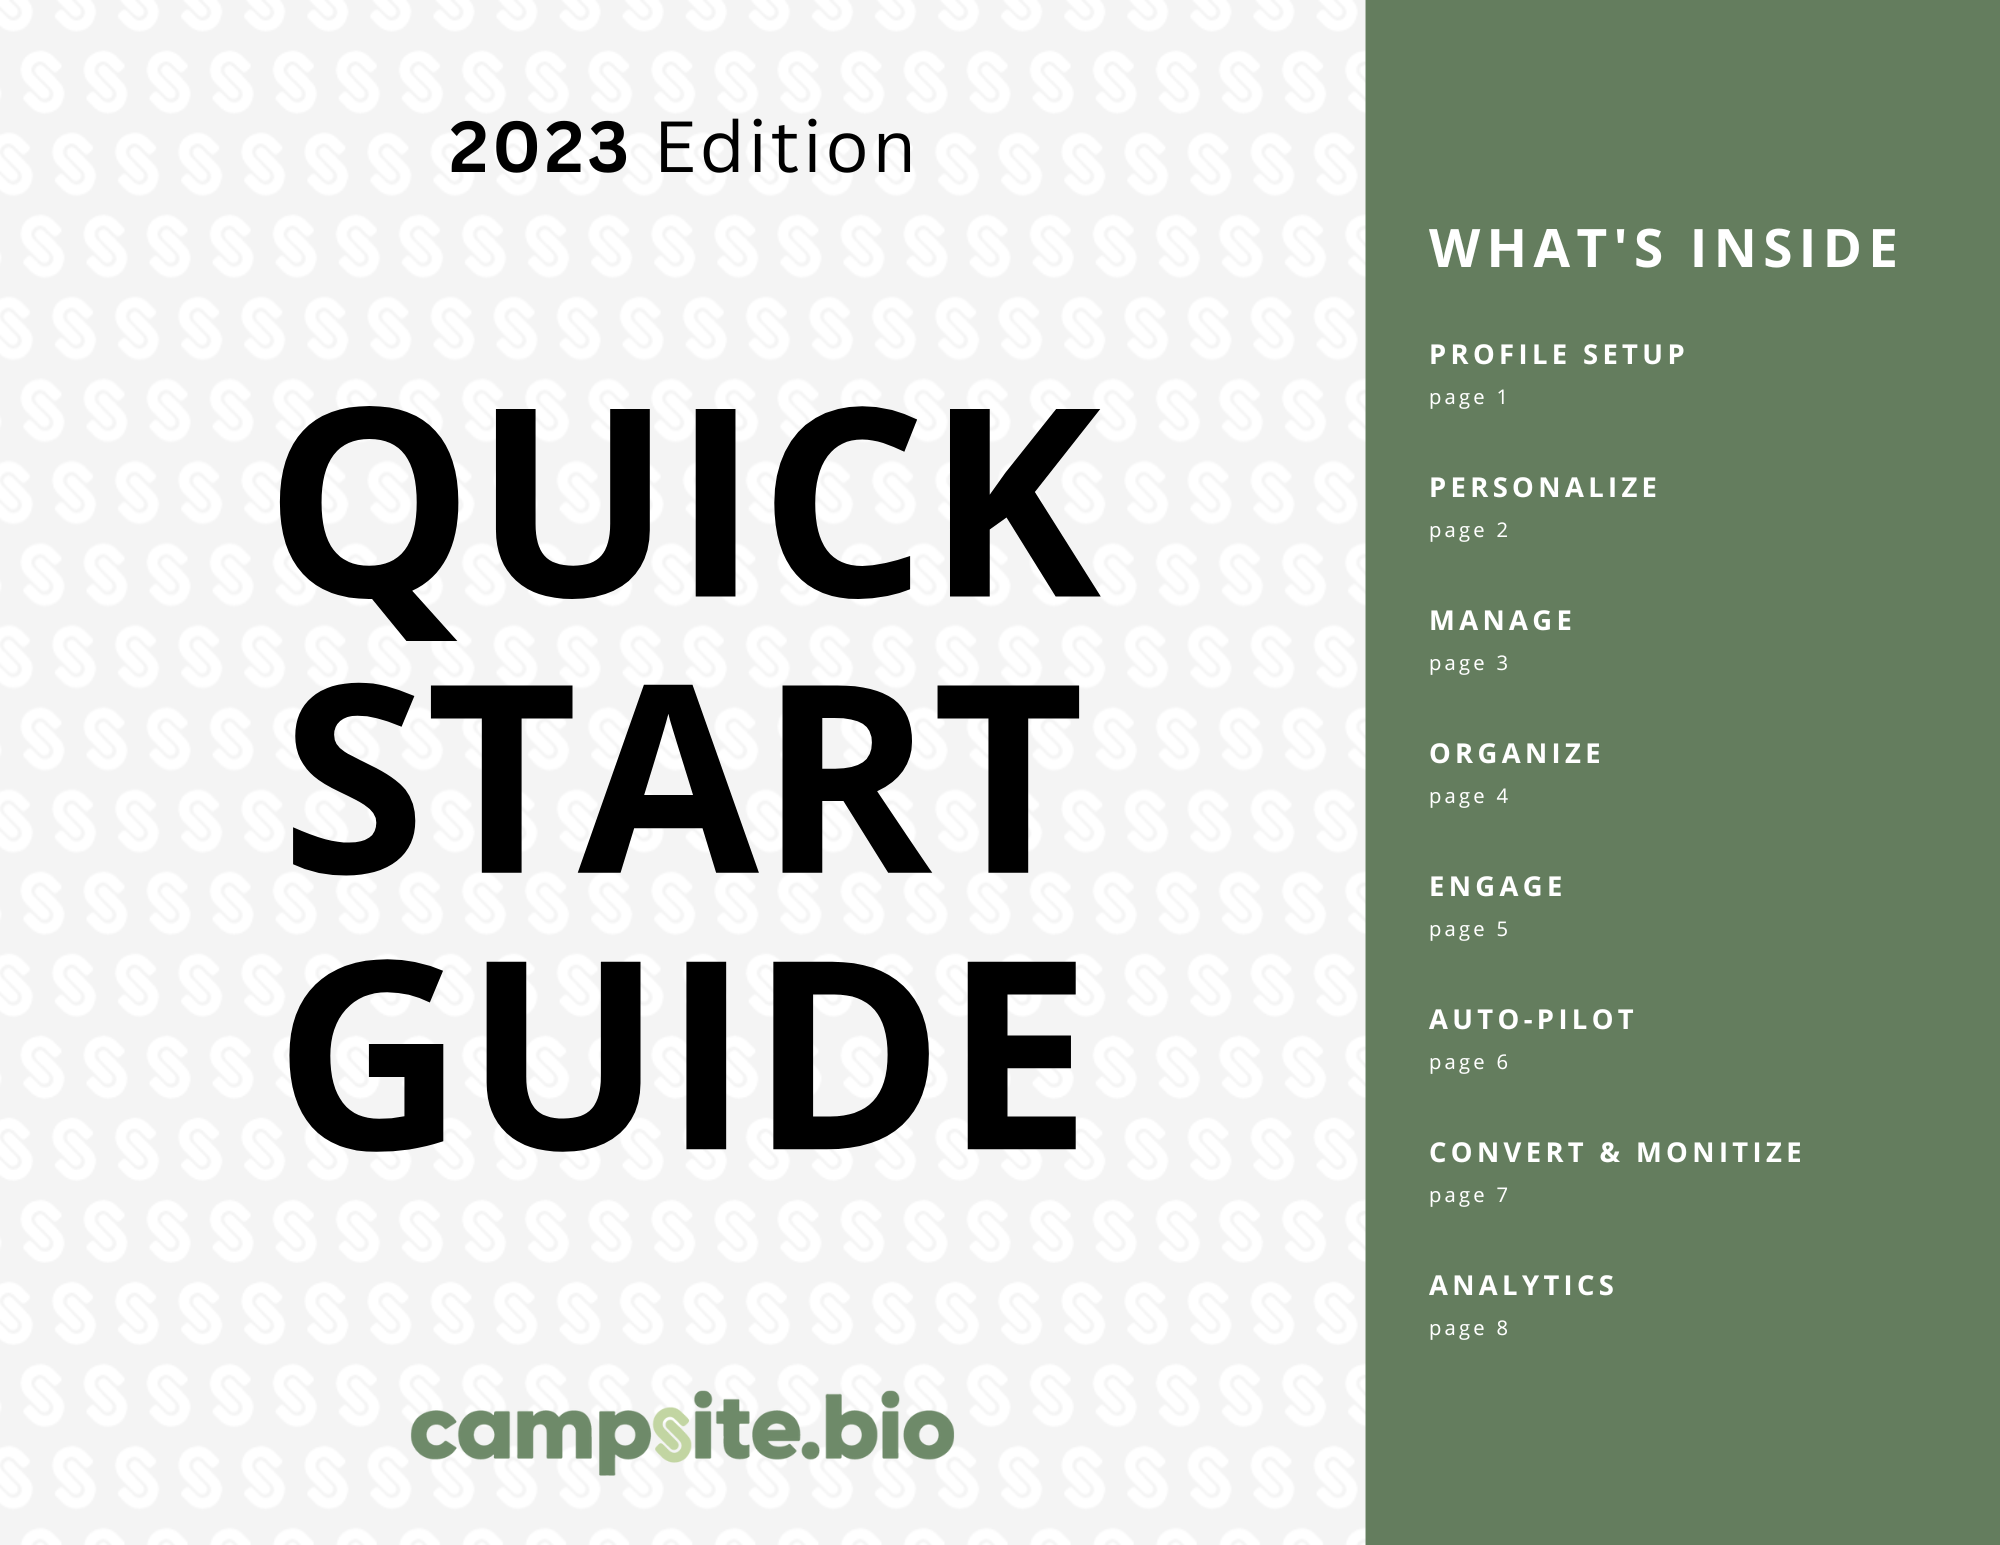 Quick Start Guide by Campsite.bio + our 2023 Roadmap